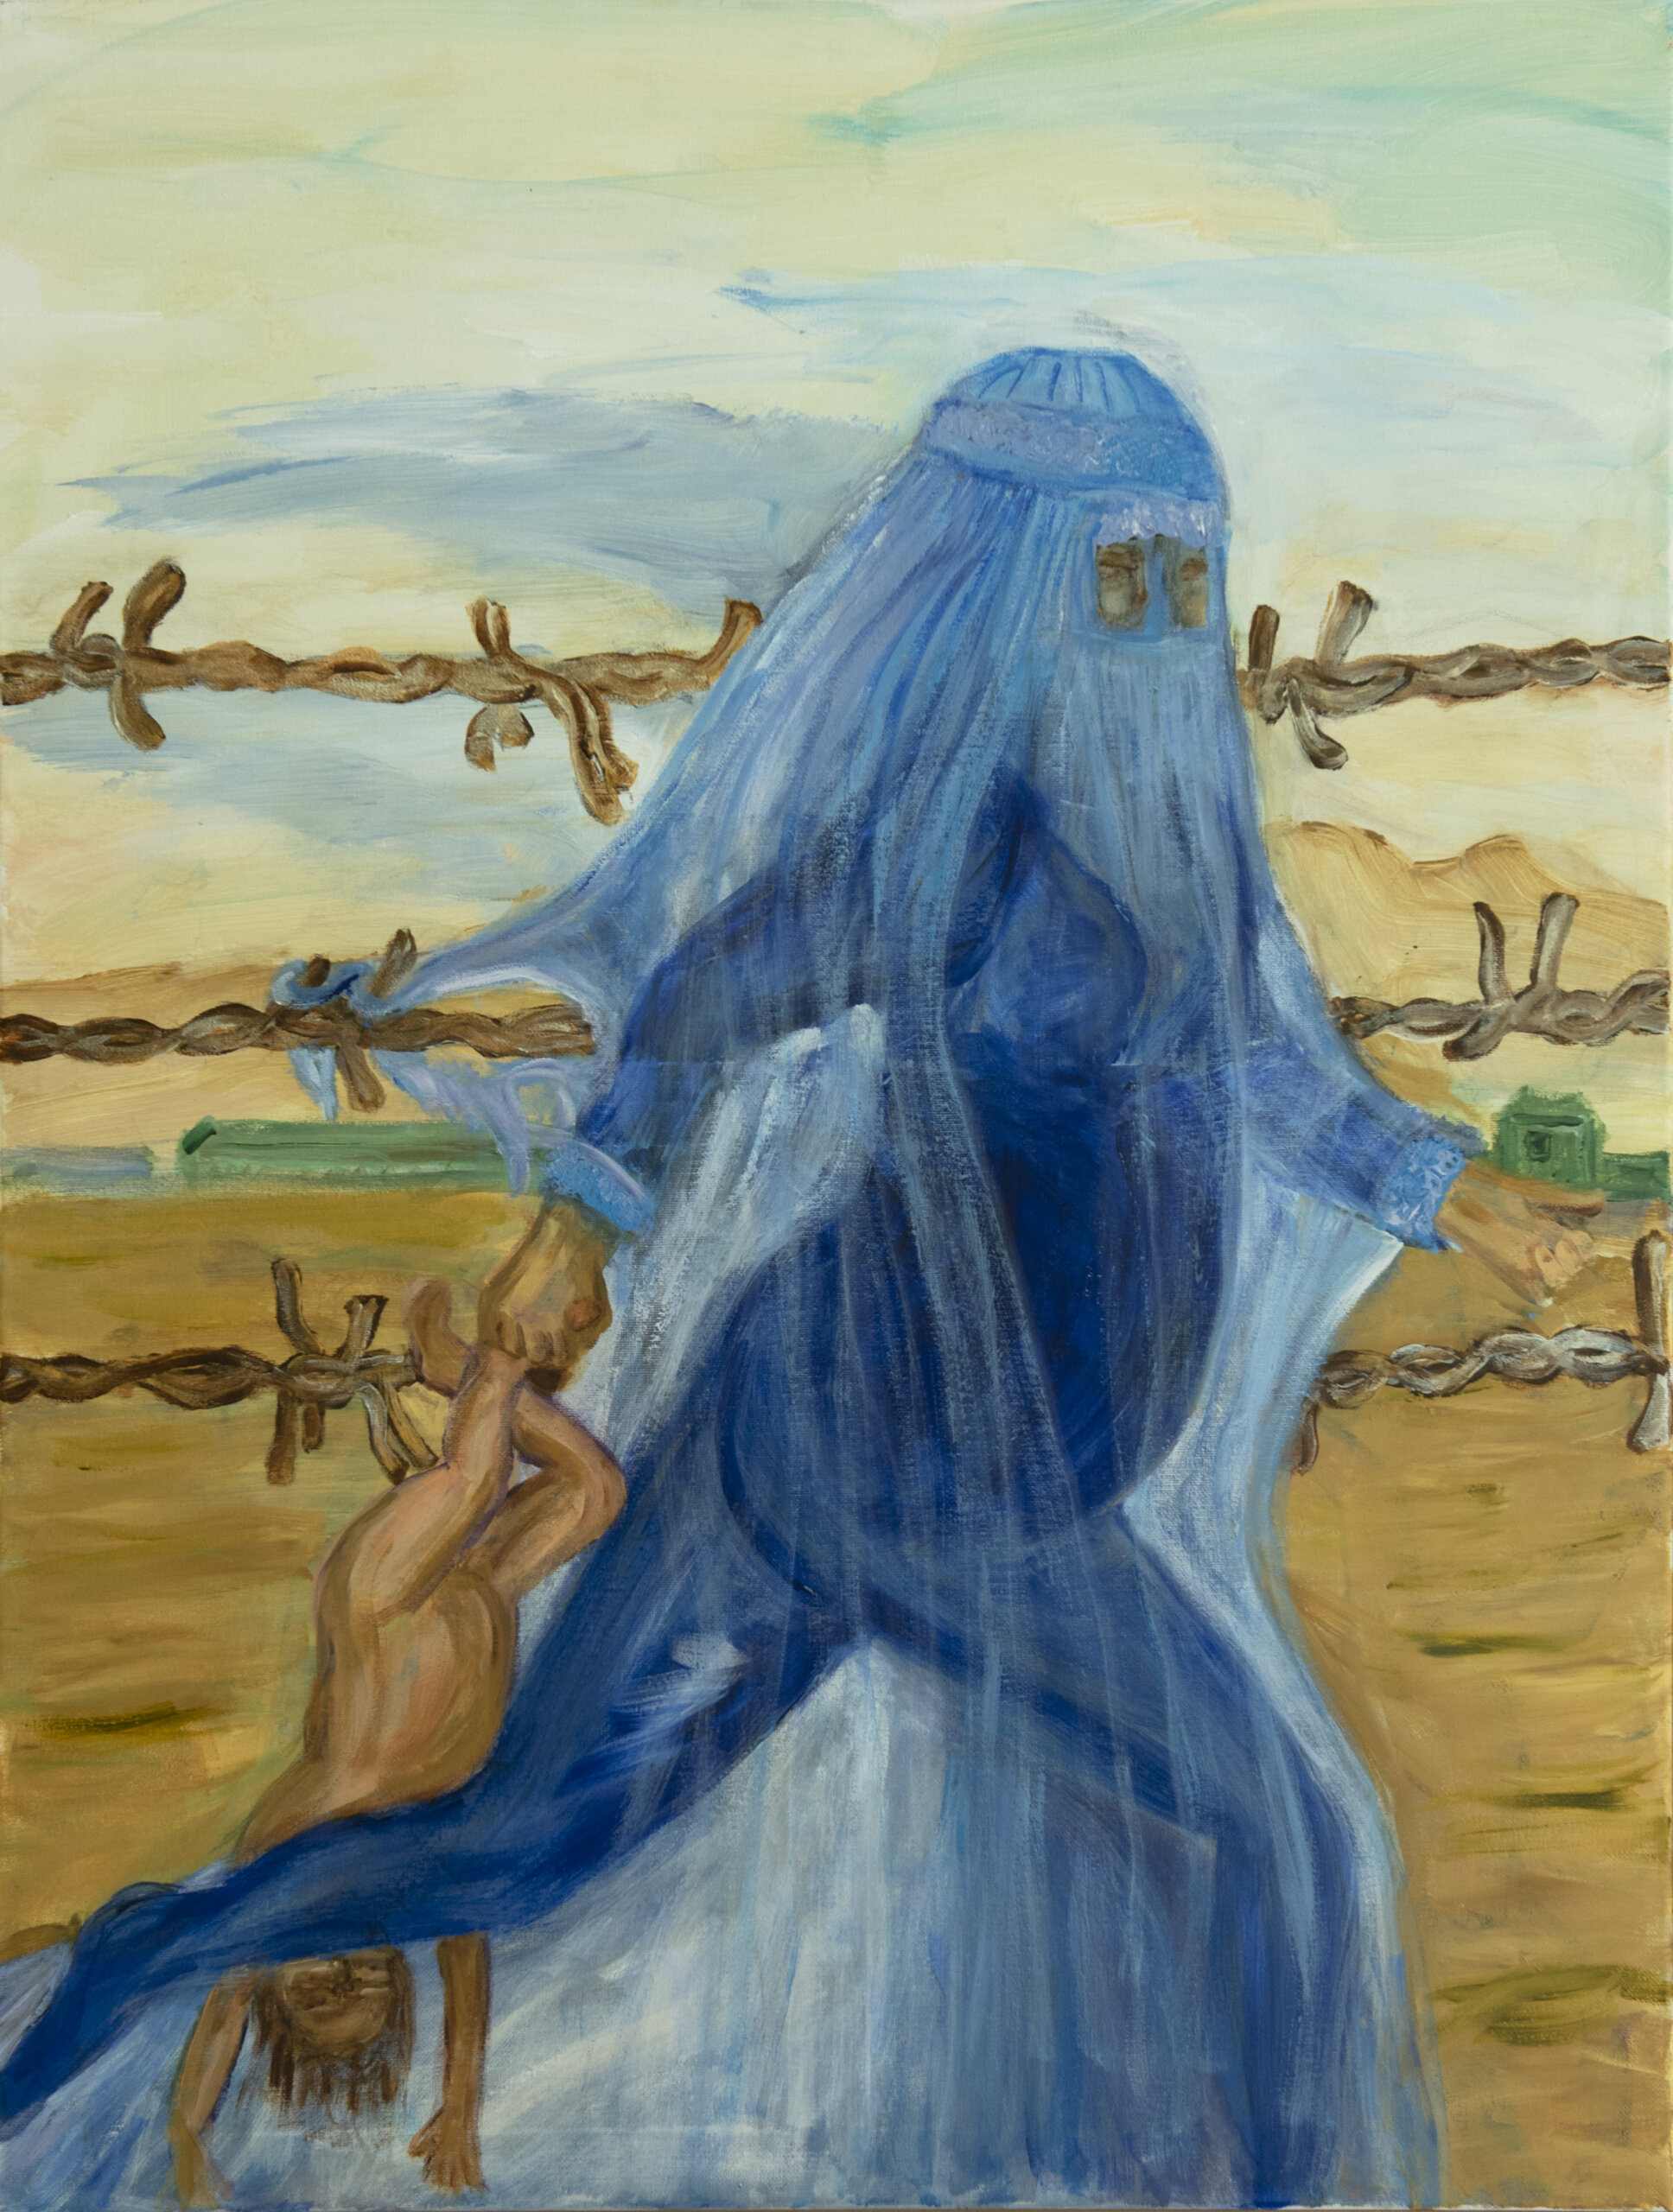 Afghanistan I. Hella de Jonge. Augustus 2021. Acryl op canvas, 60x80 cm.